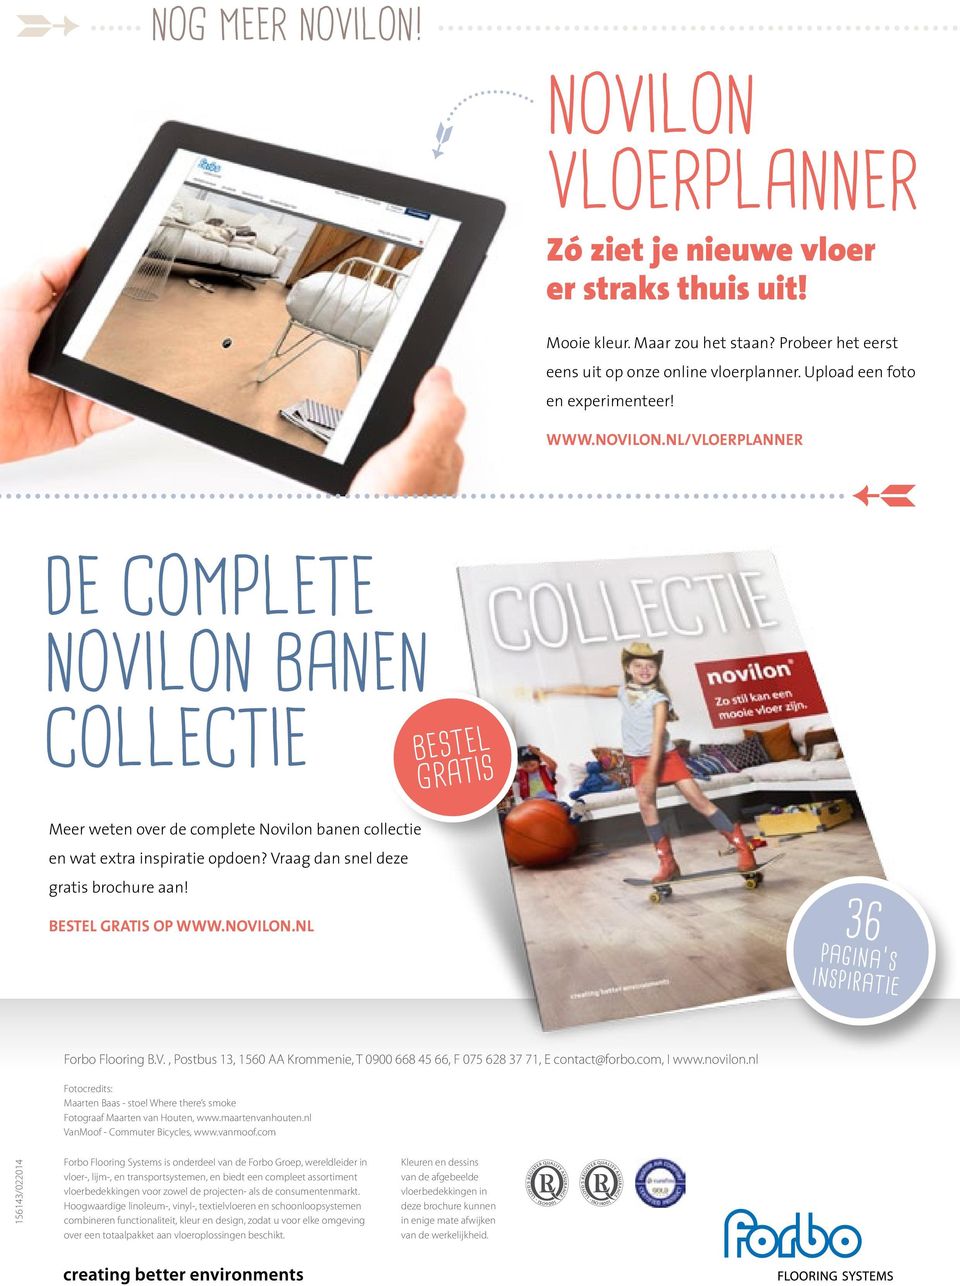 Vraag dan snel deze gratis brochure aan! Bestel gratis op www.novilon.nl 36 pagina s inspiratie Forbo Flooring B.V., Postbus 13, 1560 AA Krommenie, T 0900 668 45 66, F 075 628 37 71, E contact@forbo.